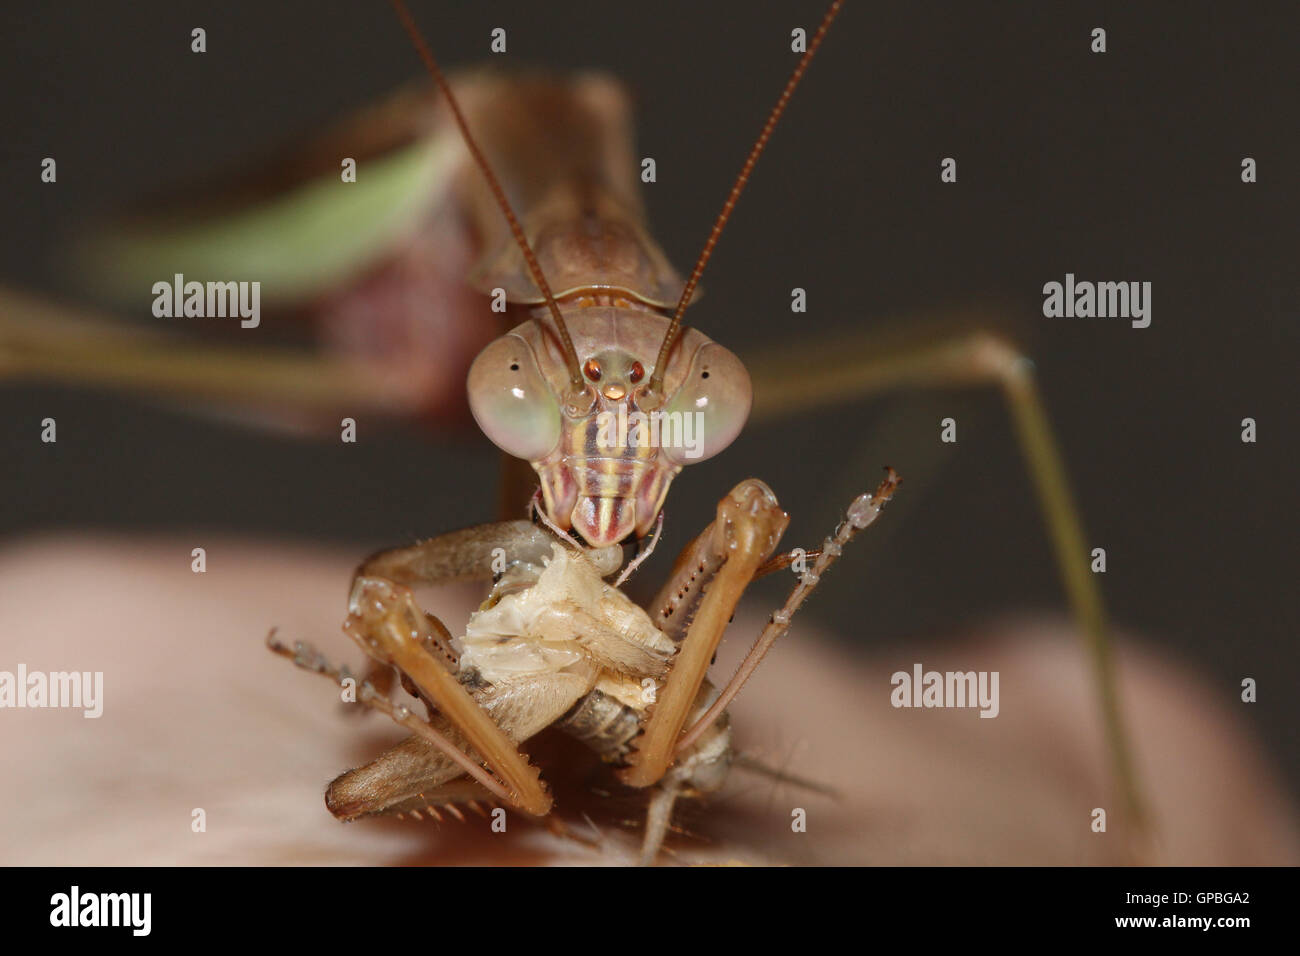 A Chinese praying mantis / giant Japanese mantis (Tenodera sinensis) eating a house cricket (Acheta domestica), Indiana, USA Stock Photo